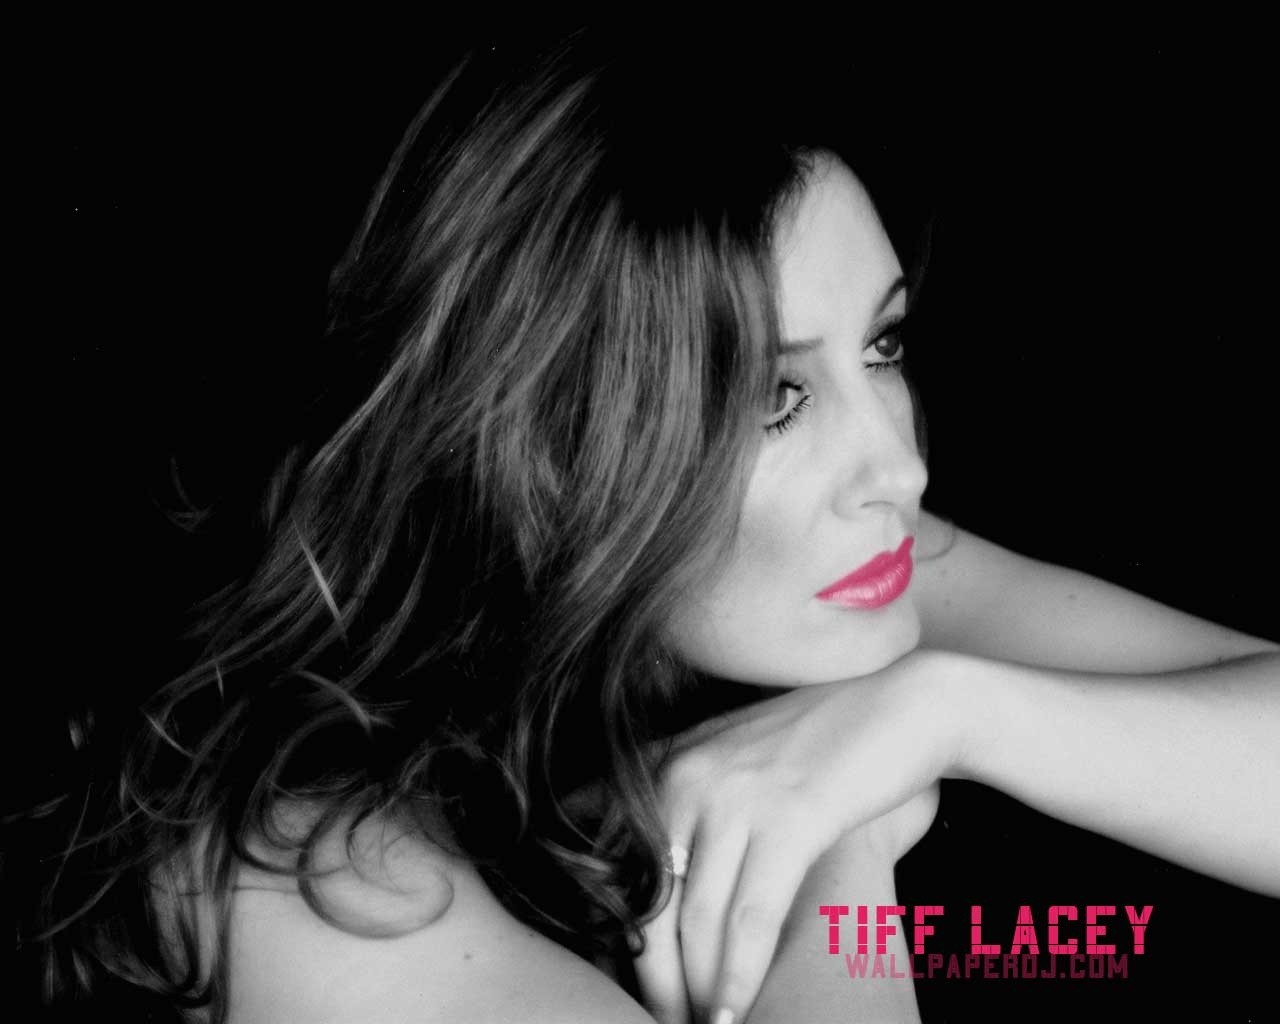 Тифф девушка. Тифф Лейси вокалистка. TIFF Lacey певица. TIFF Lacey фото. ATB вокалистка.